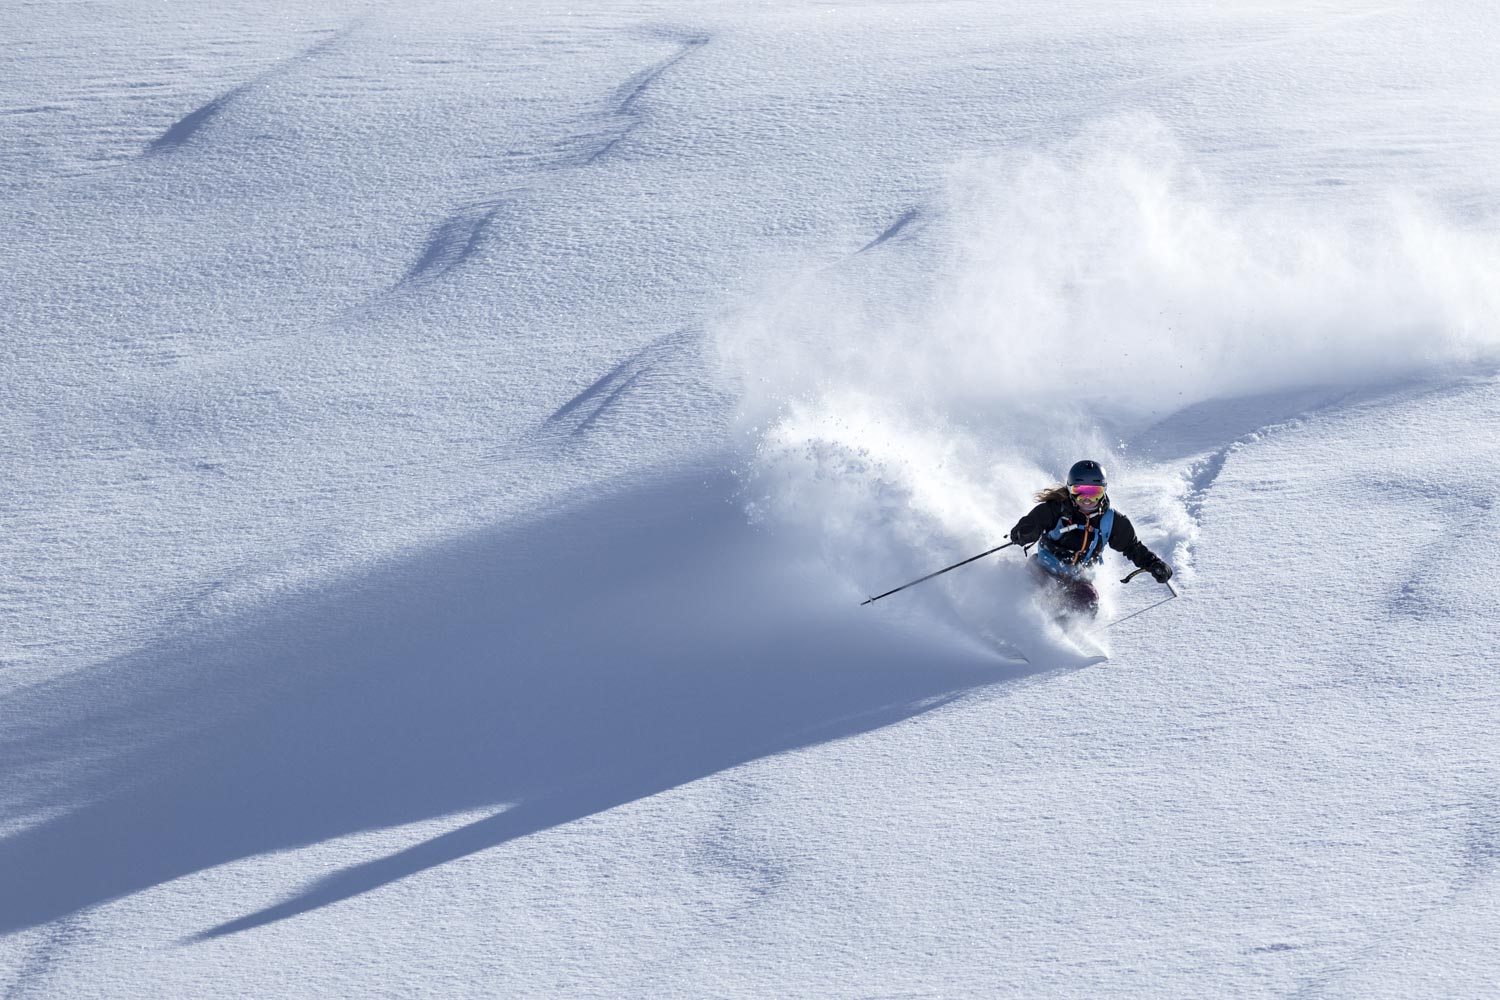 Sungod - Goggles - Powder Turn - Ski - Off Piste - Val d'Isère - Frankie Pioli